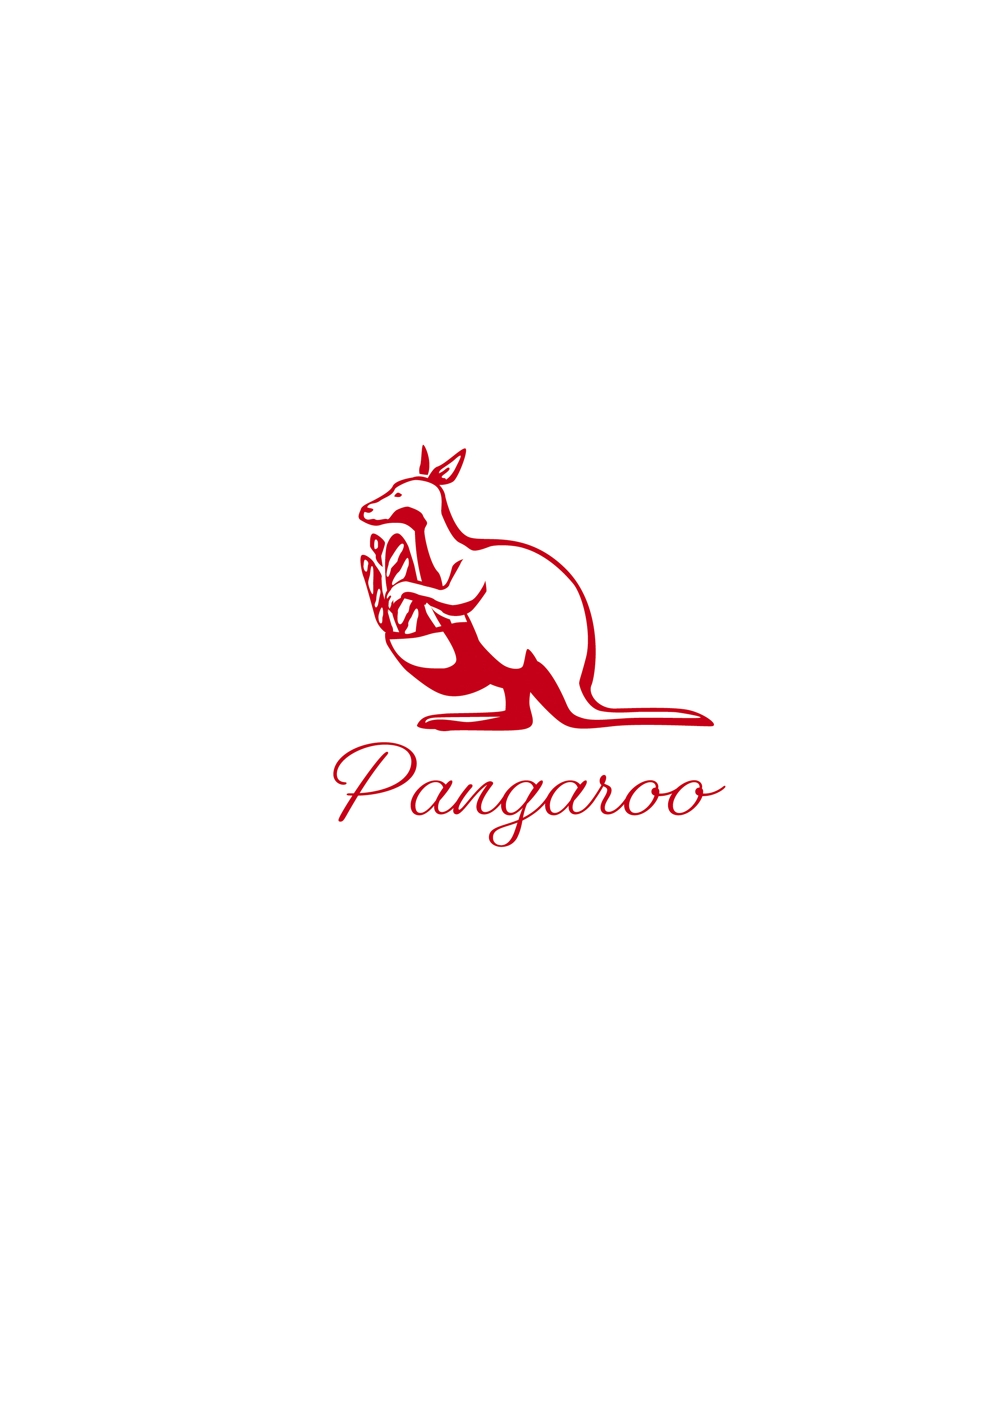 Pangaroo_logo_A.jpg